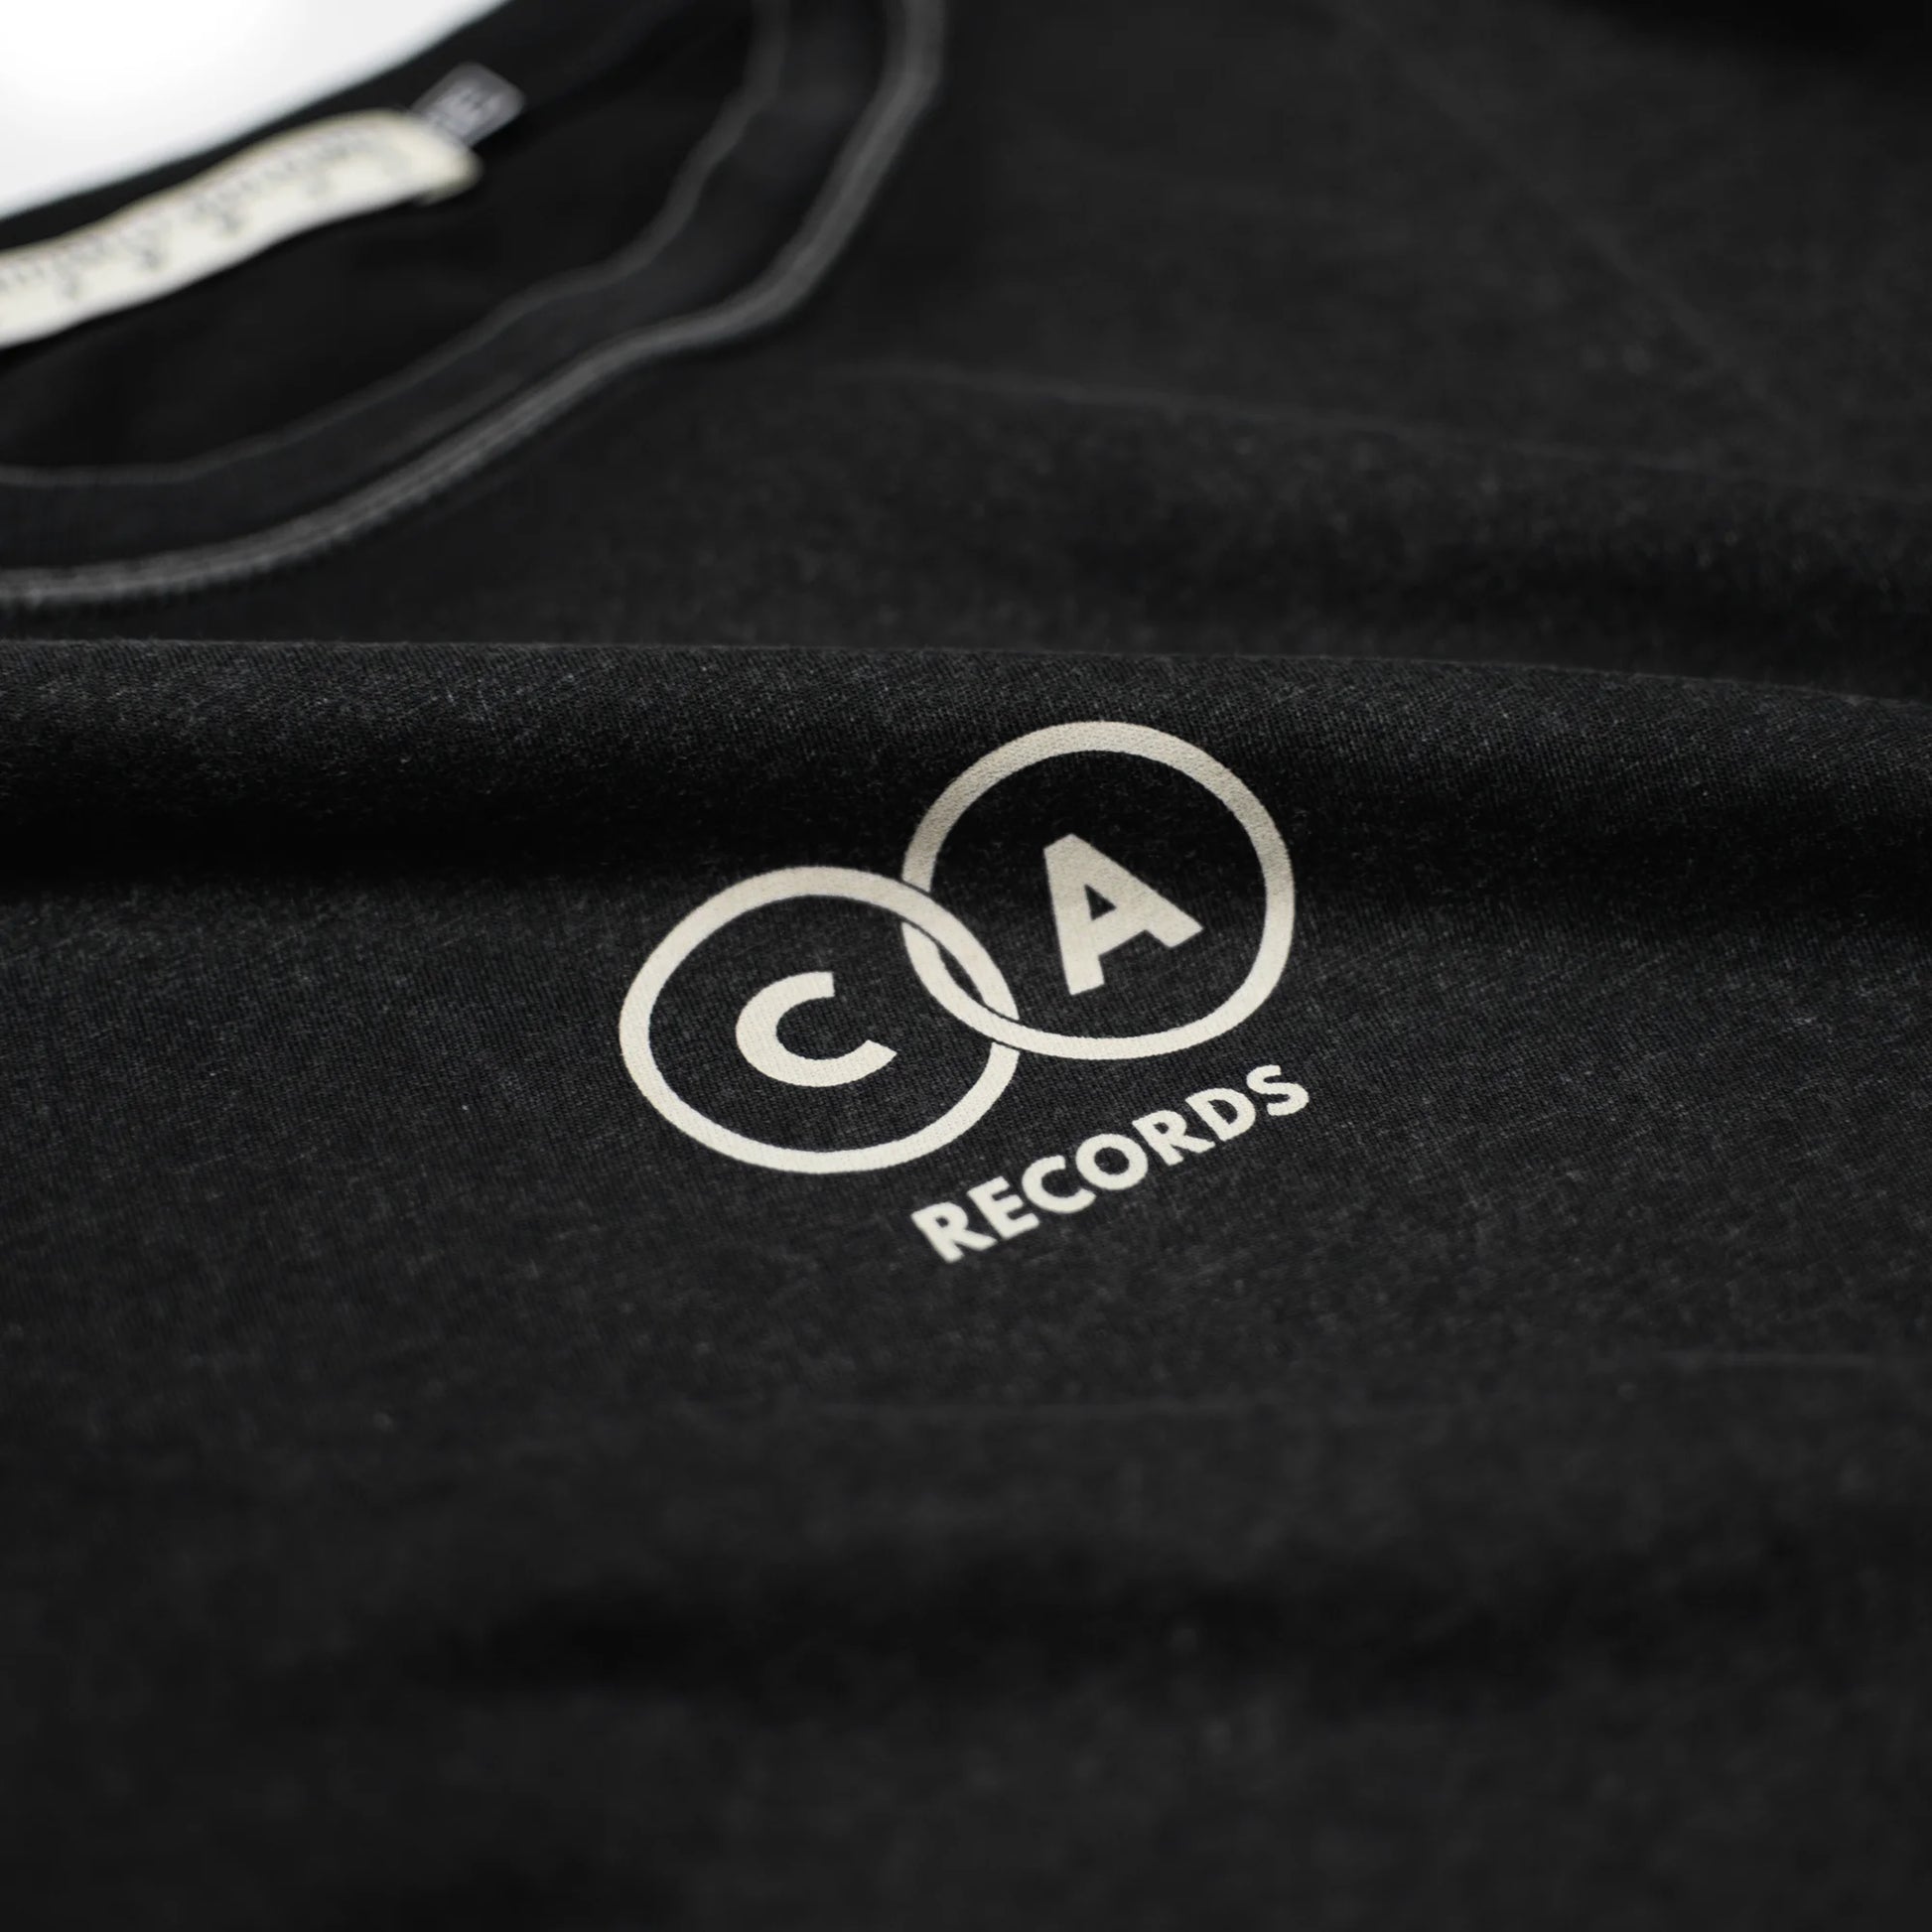 Black Overdye Vinyl Record Revolution Graphic T-Shirt Front Close-Up